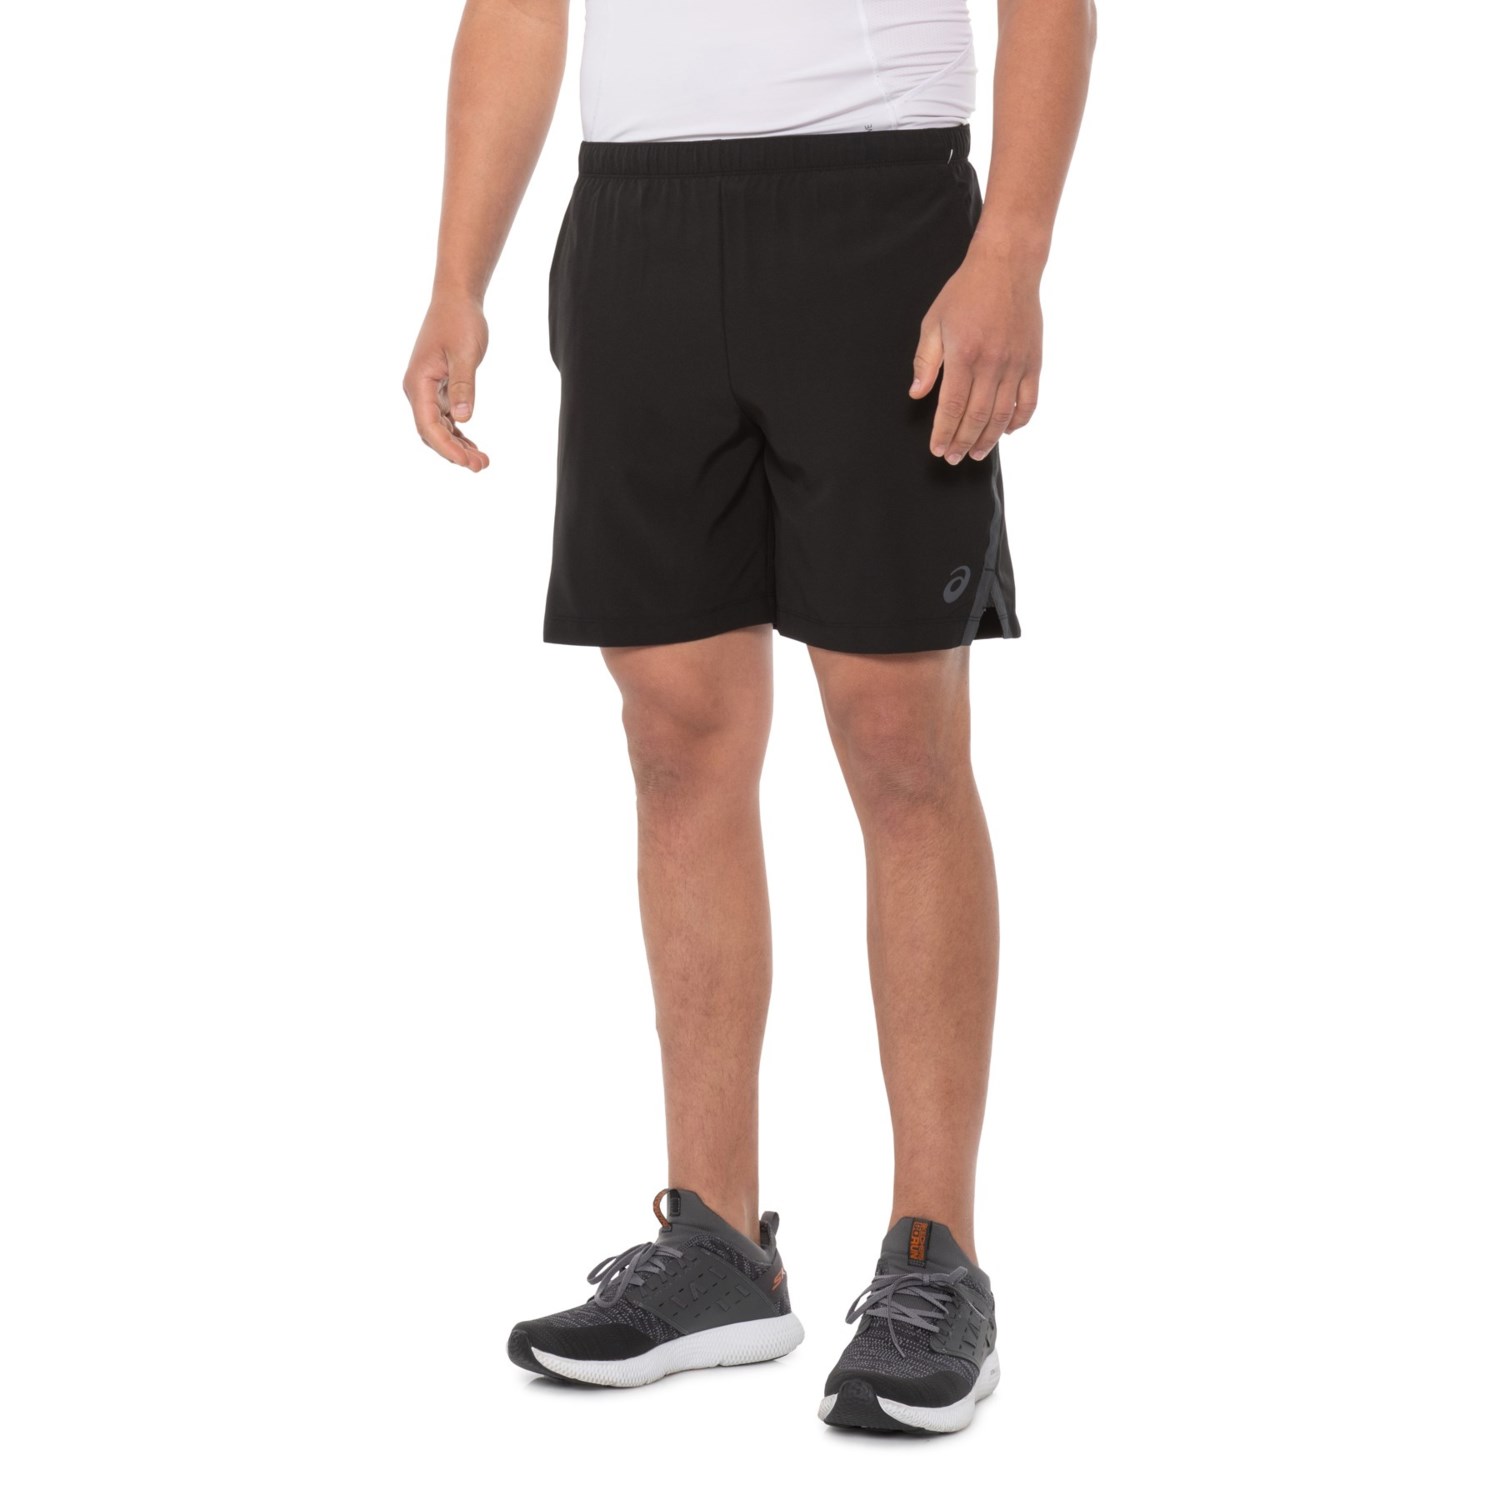 ASICS Reflective Stripe Running Shorts (For Men) - Save 37%